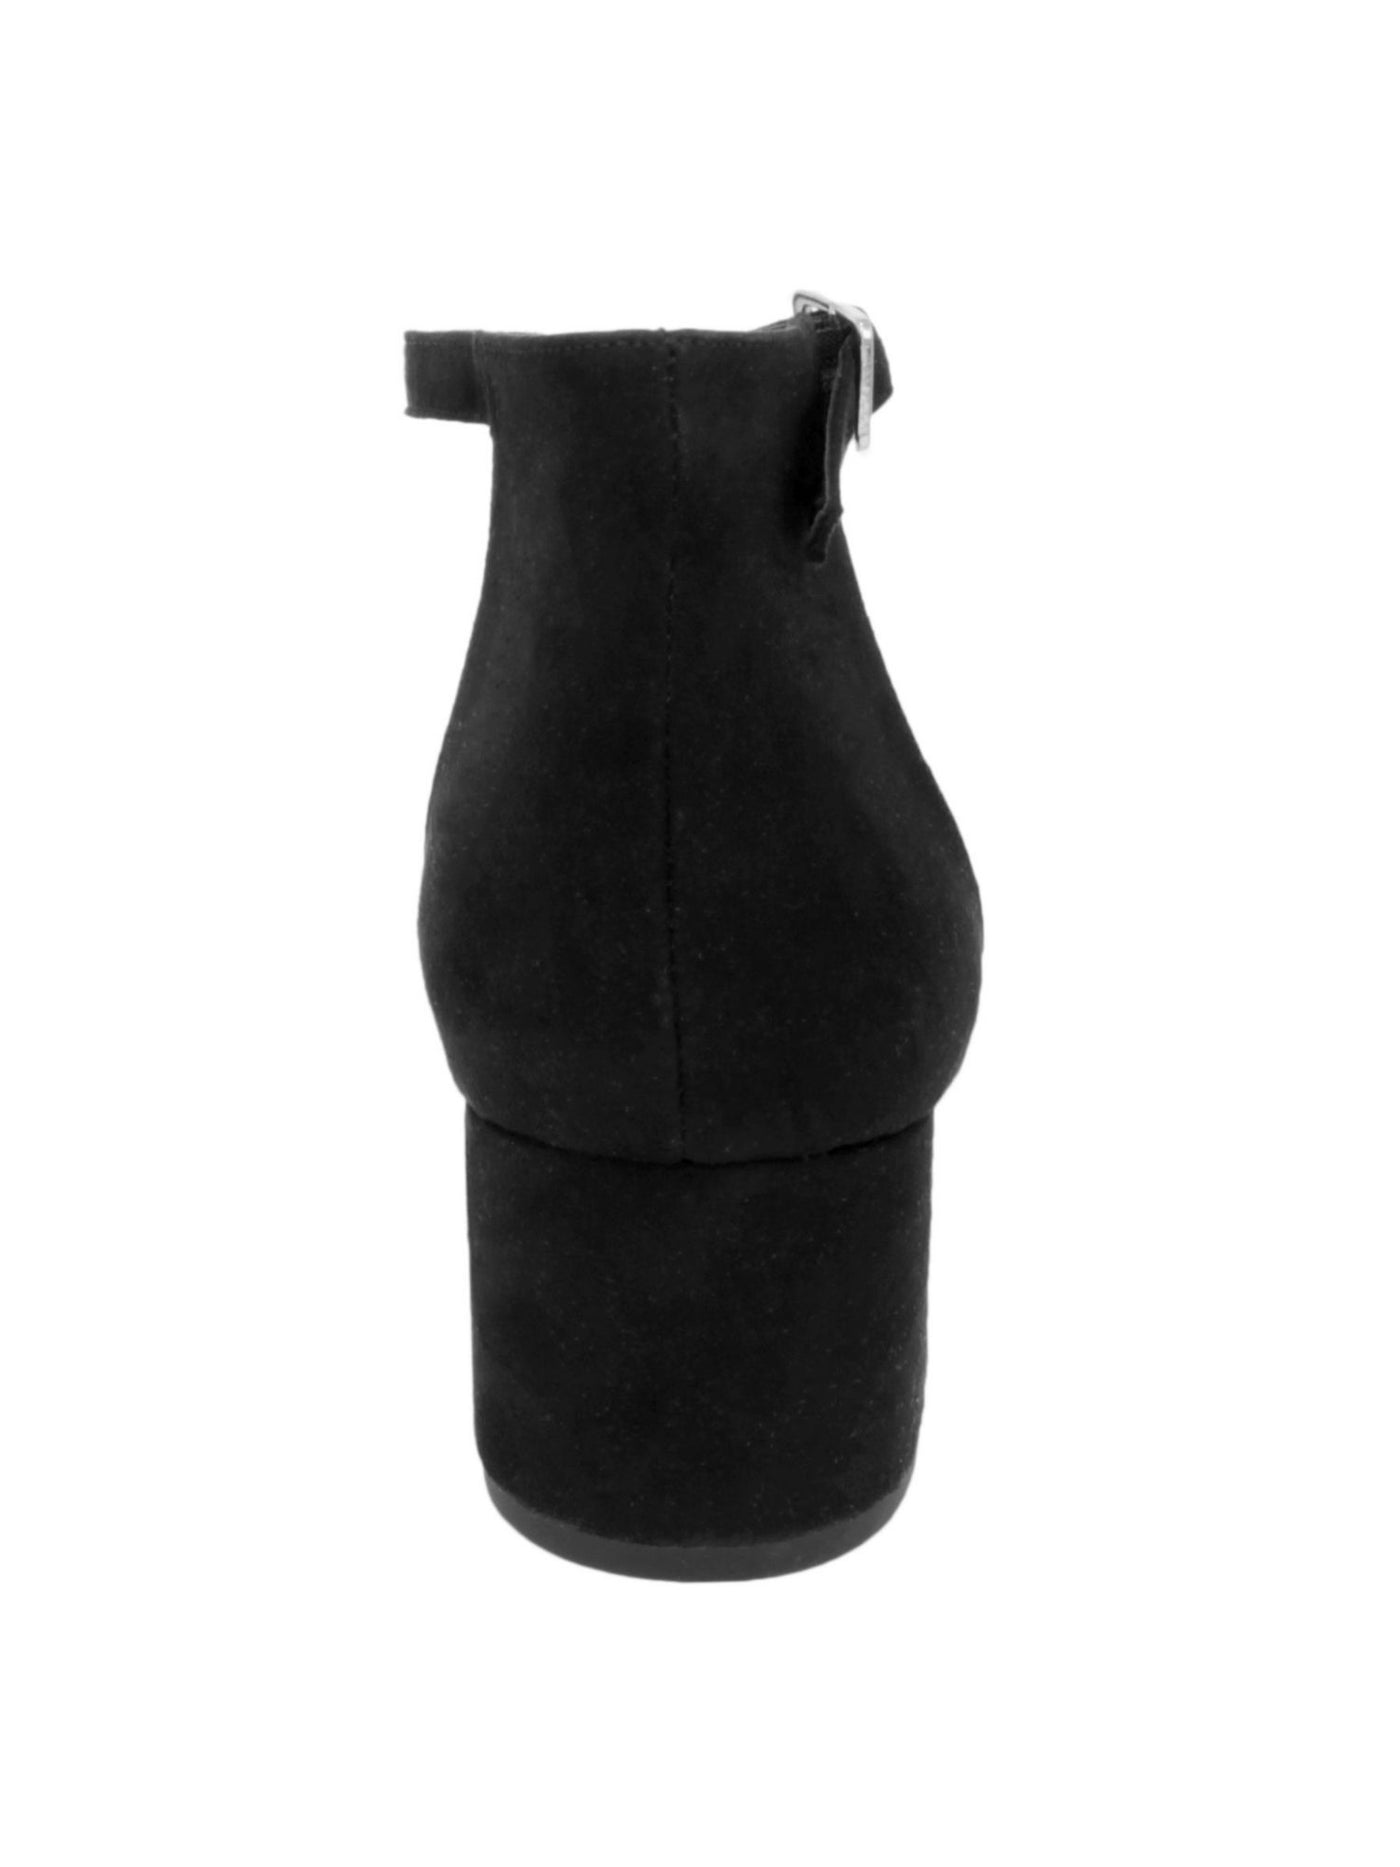 SUGAR Womens Black Adjustable Strap Noelle Low Open Toe Block Heel Buckle Dress Sandals 8 M